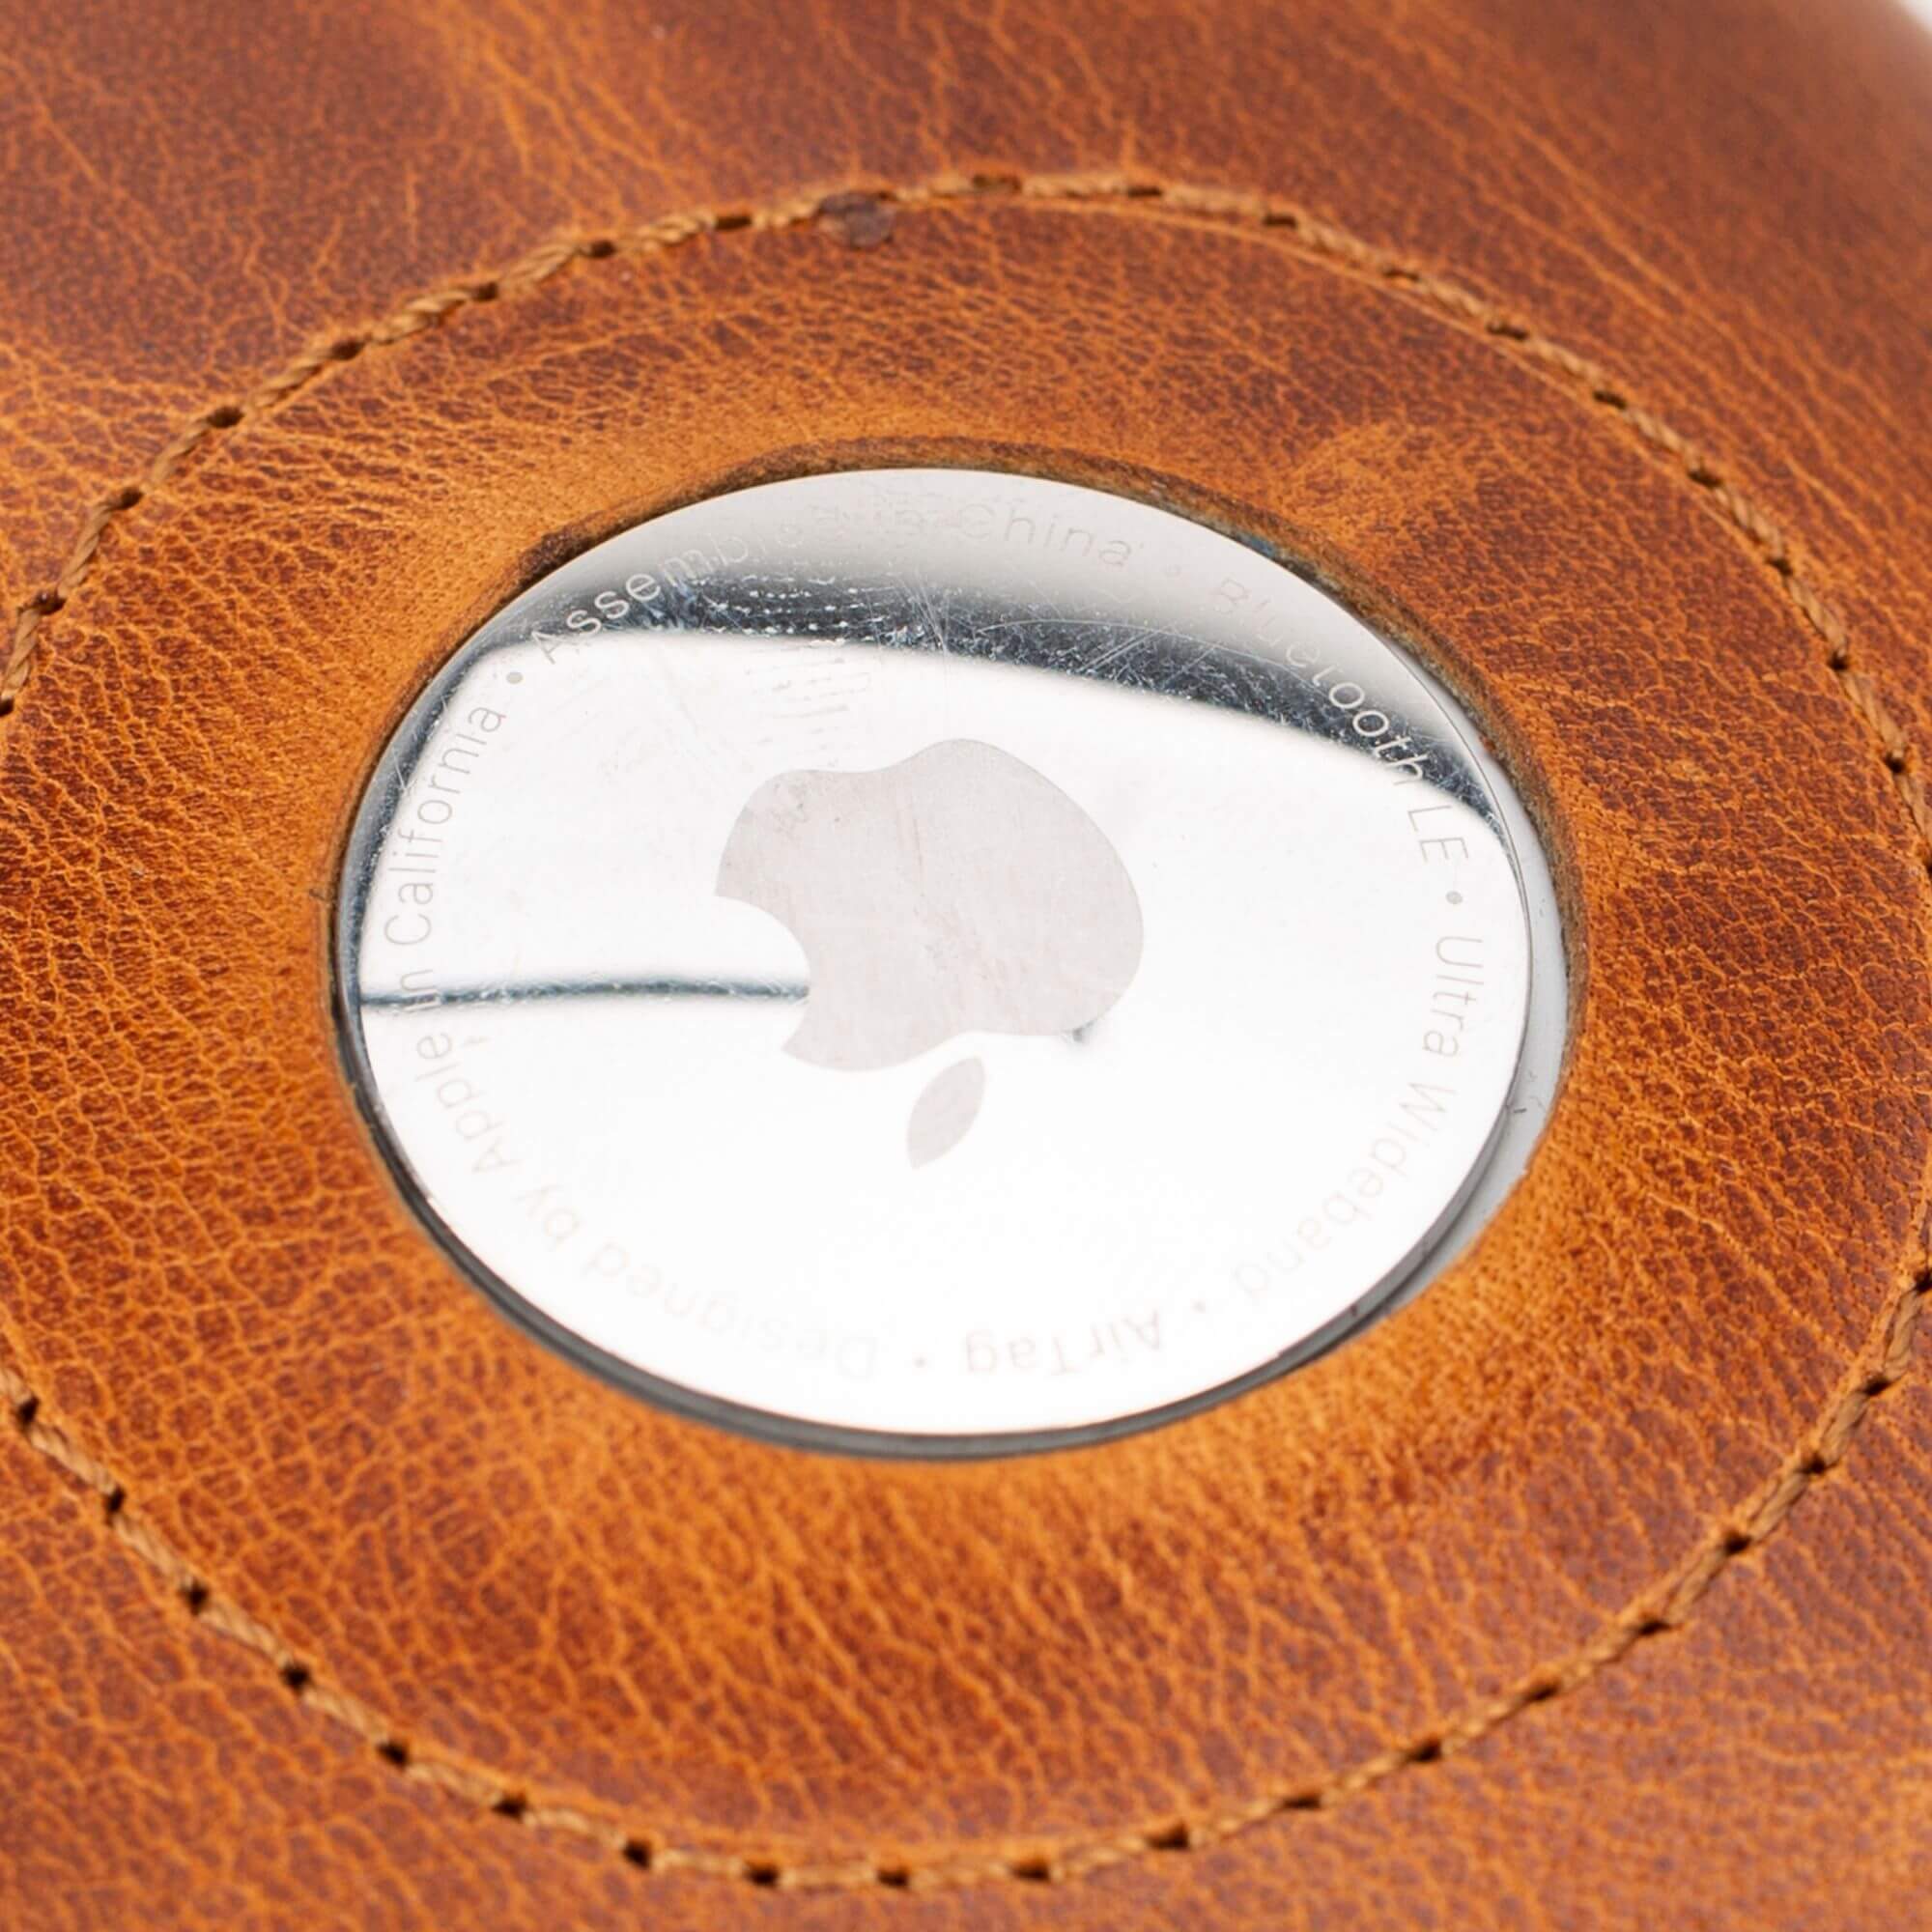 Douglas Leather Pop-Up Cardholder with Compatible Apple AirTag - Vegetal Tan - TORONATA